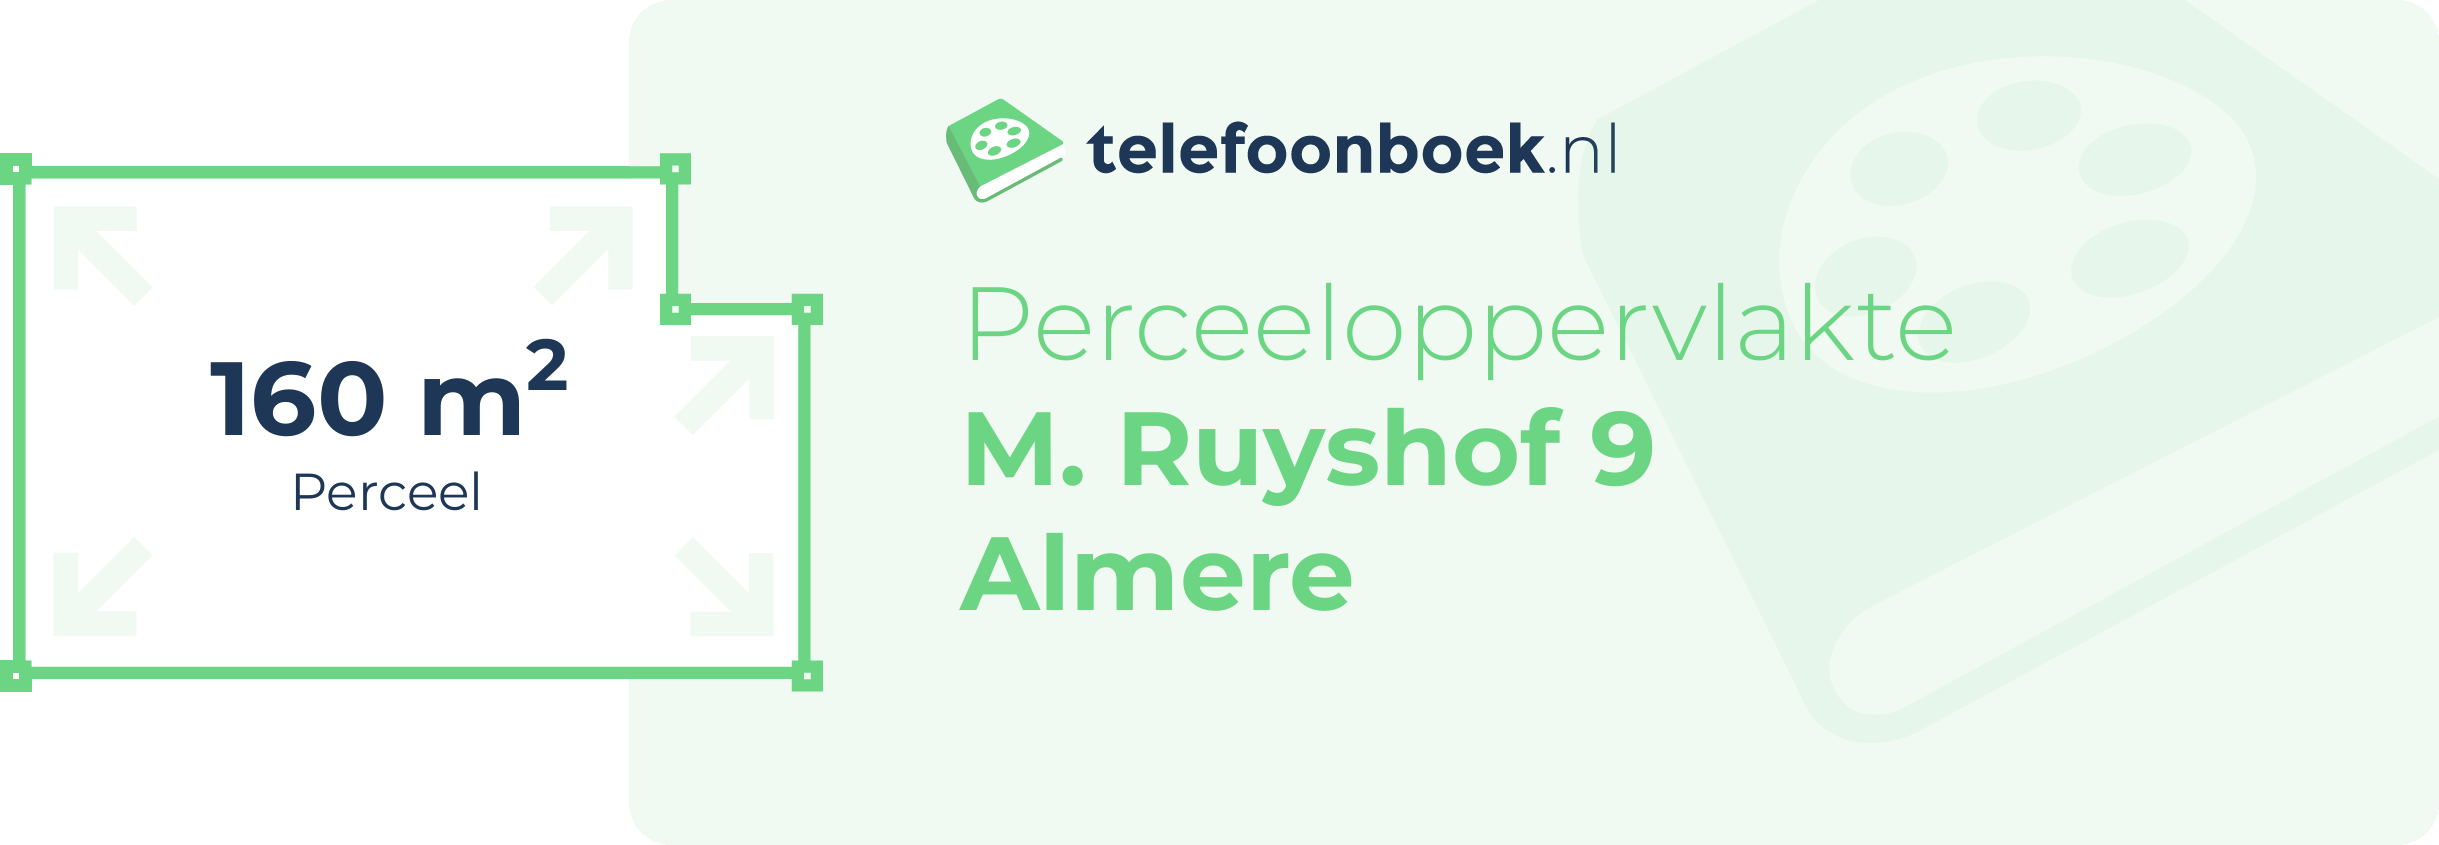 Perceeloppervlakte M. Ruyshof 9 Almere